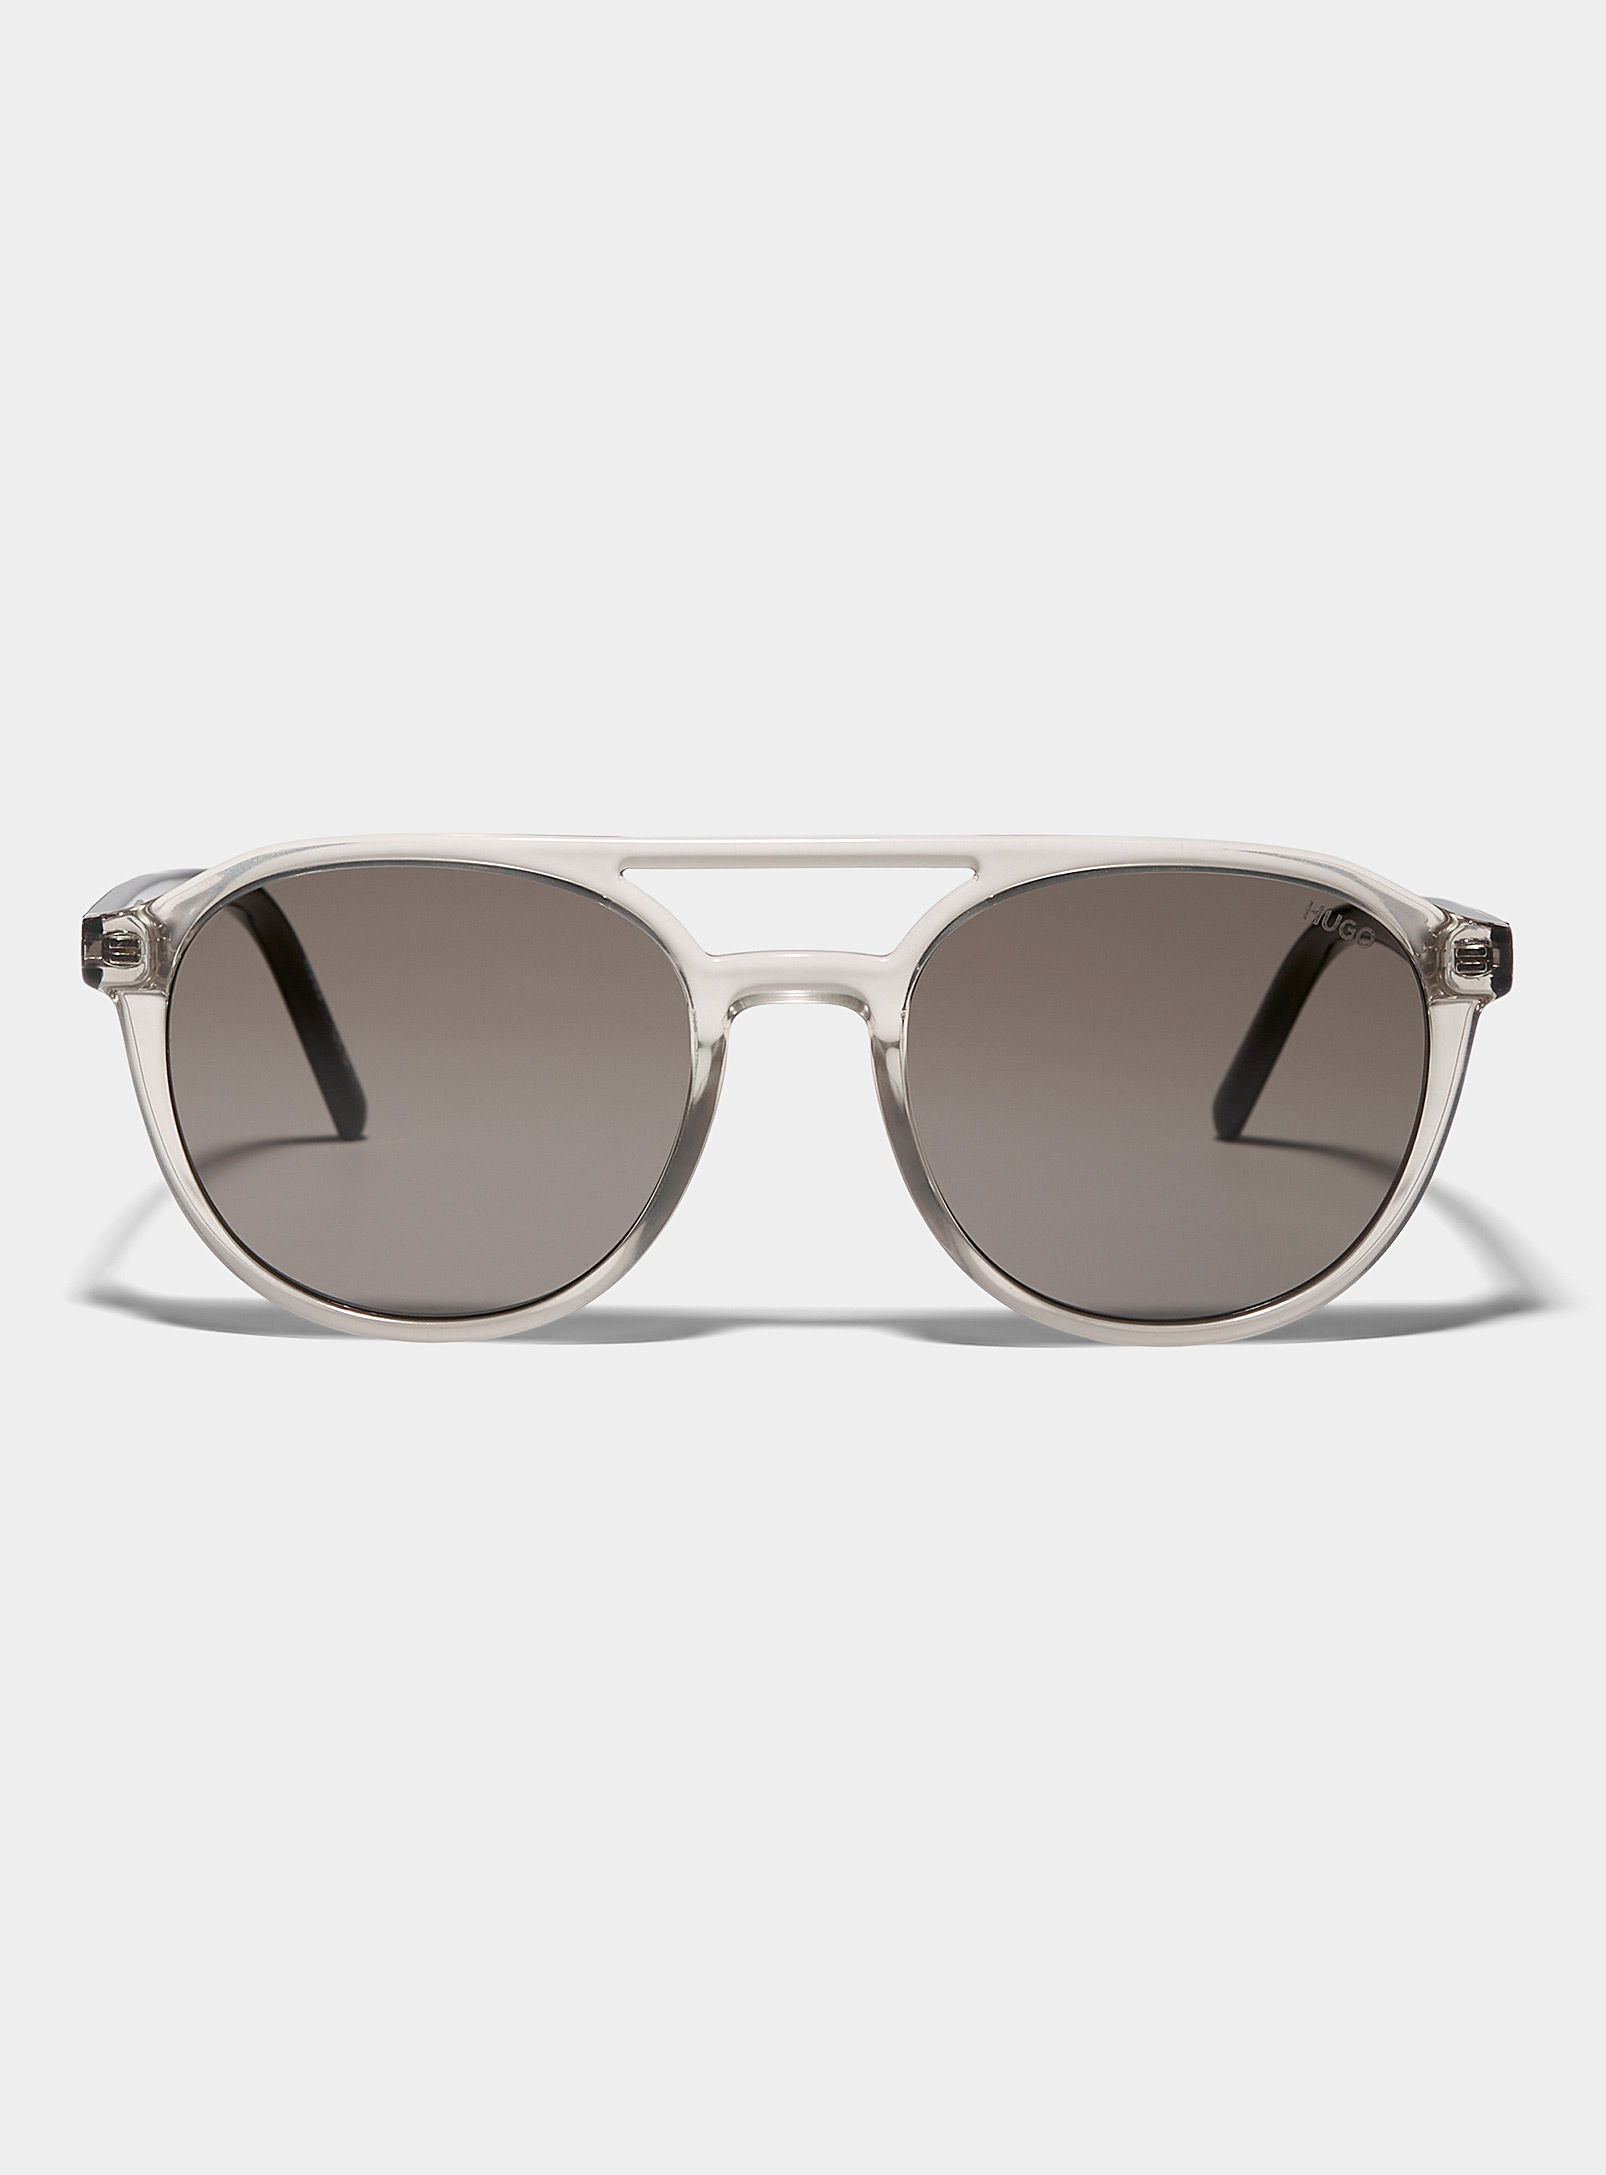 HUGO - Men's Double-bridge round sunglasses